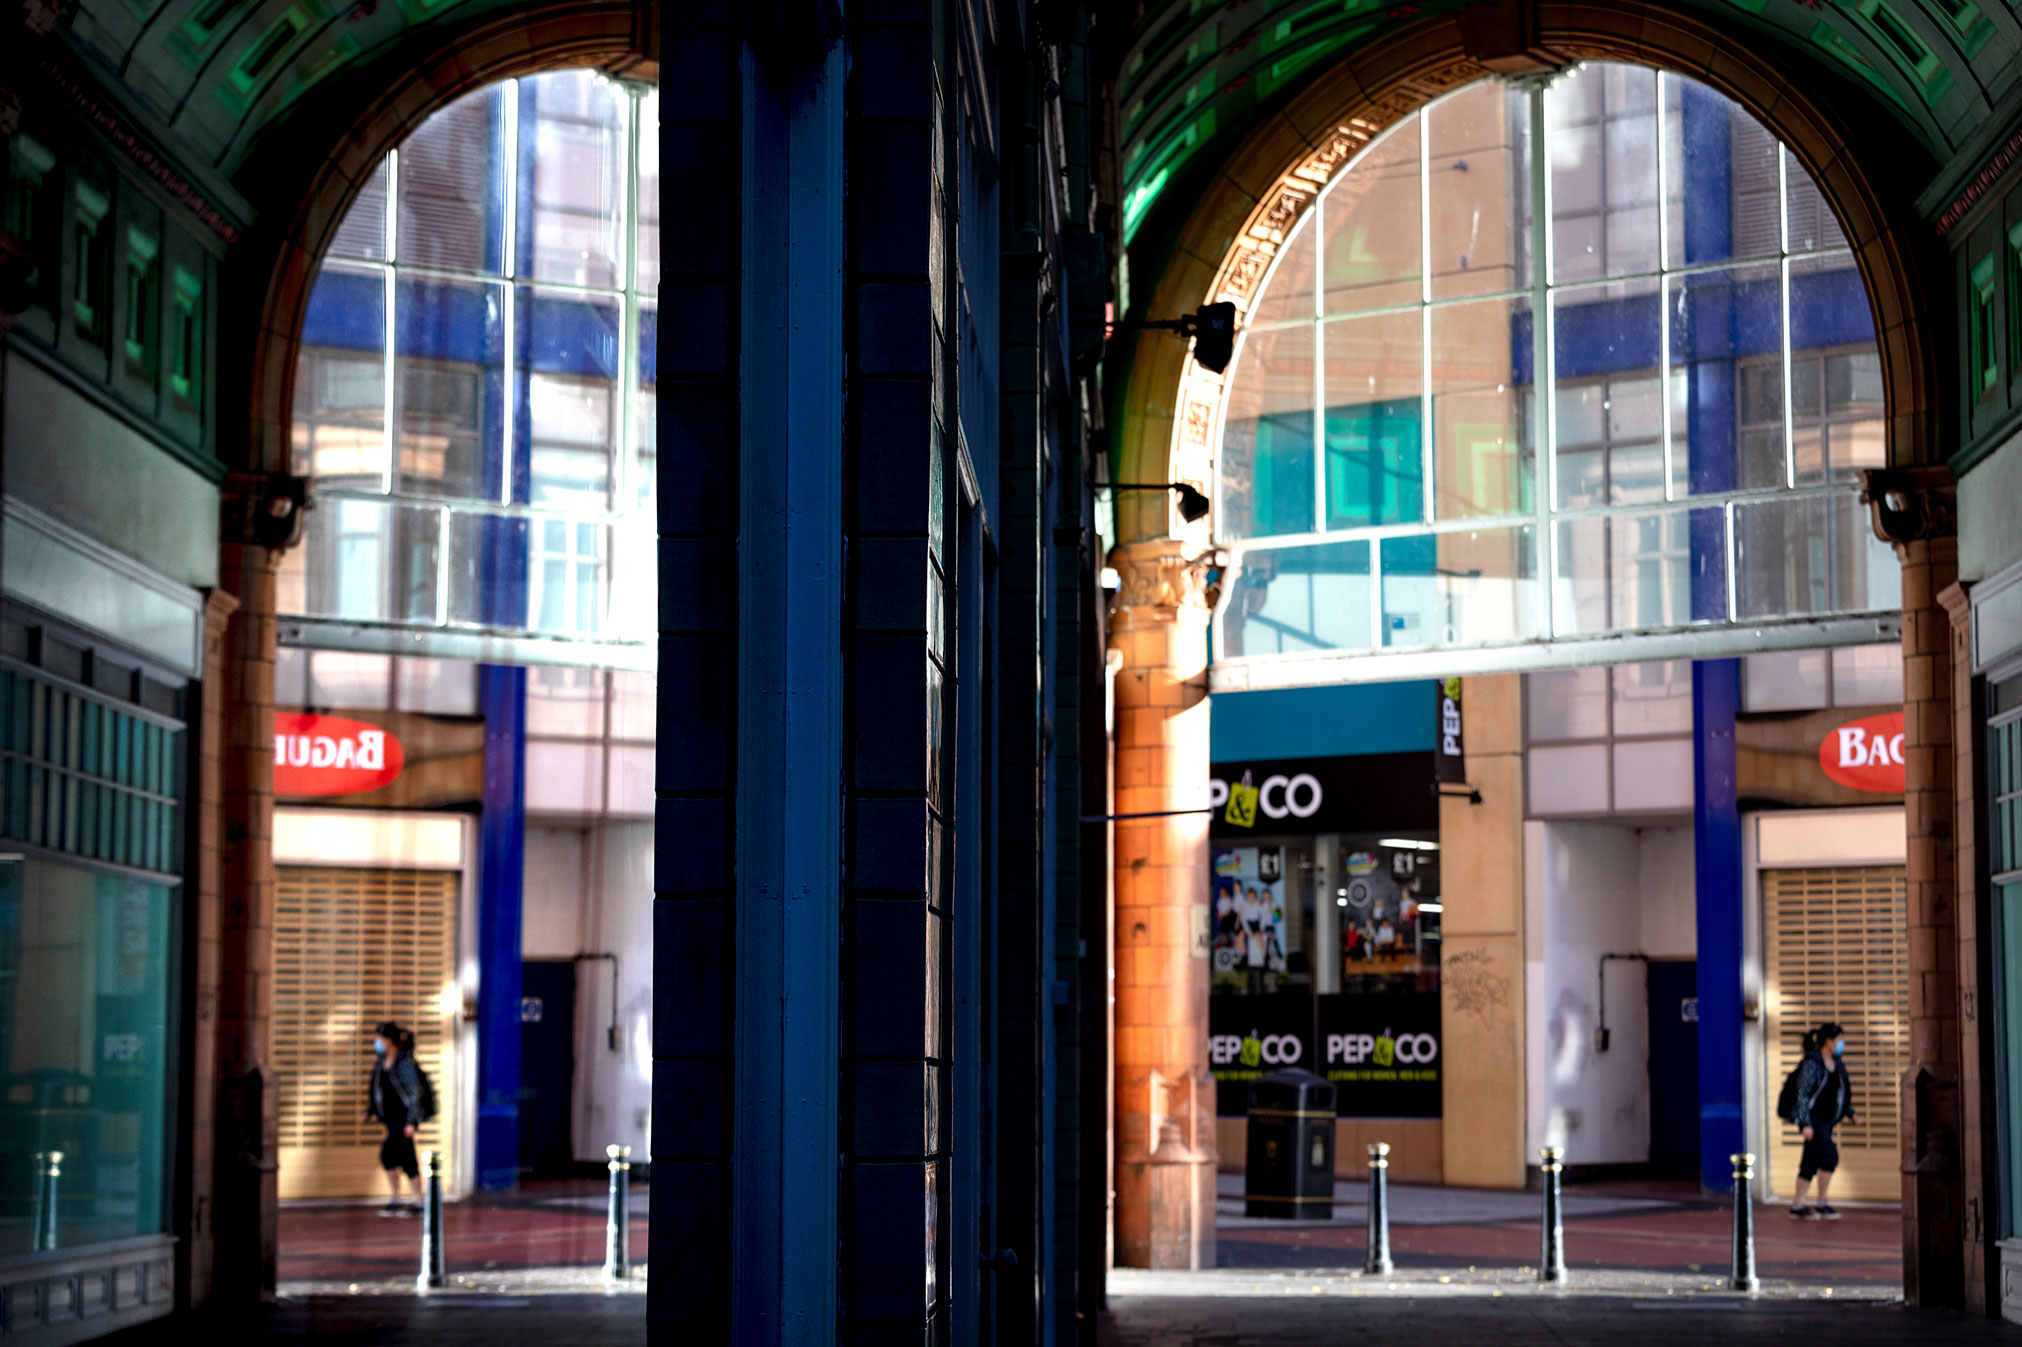 City Arcade Birmingham